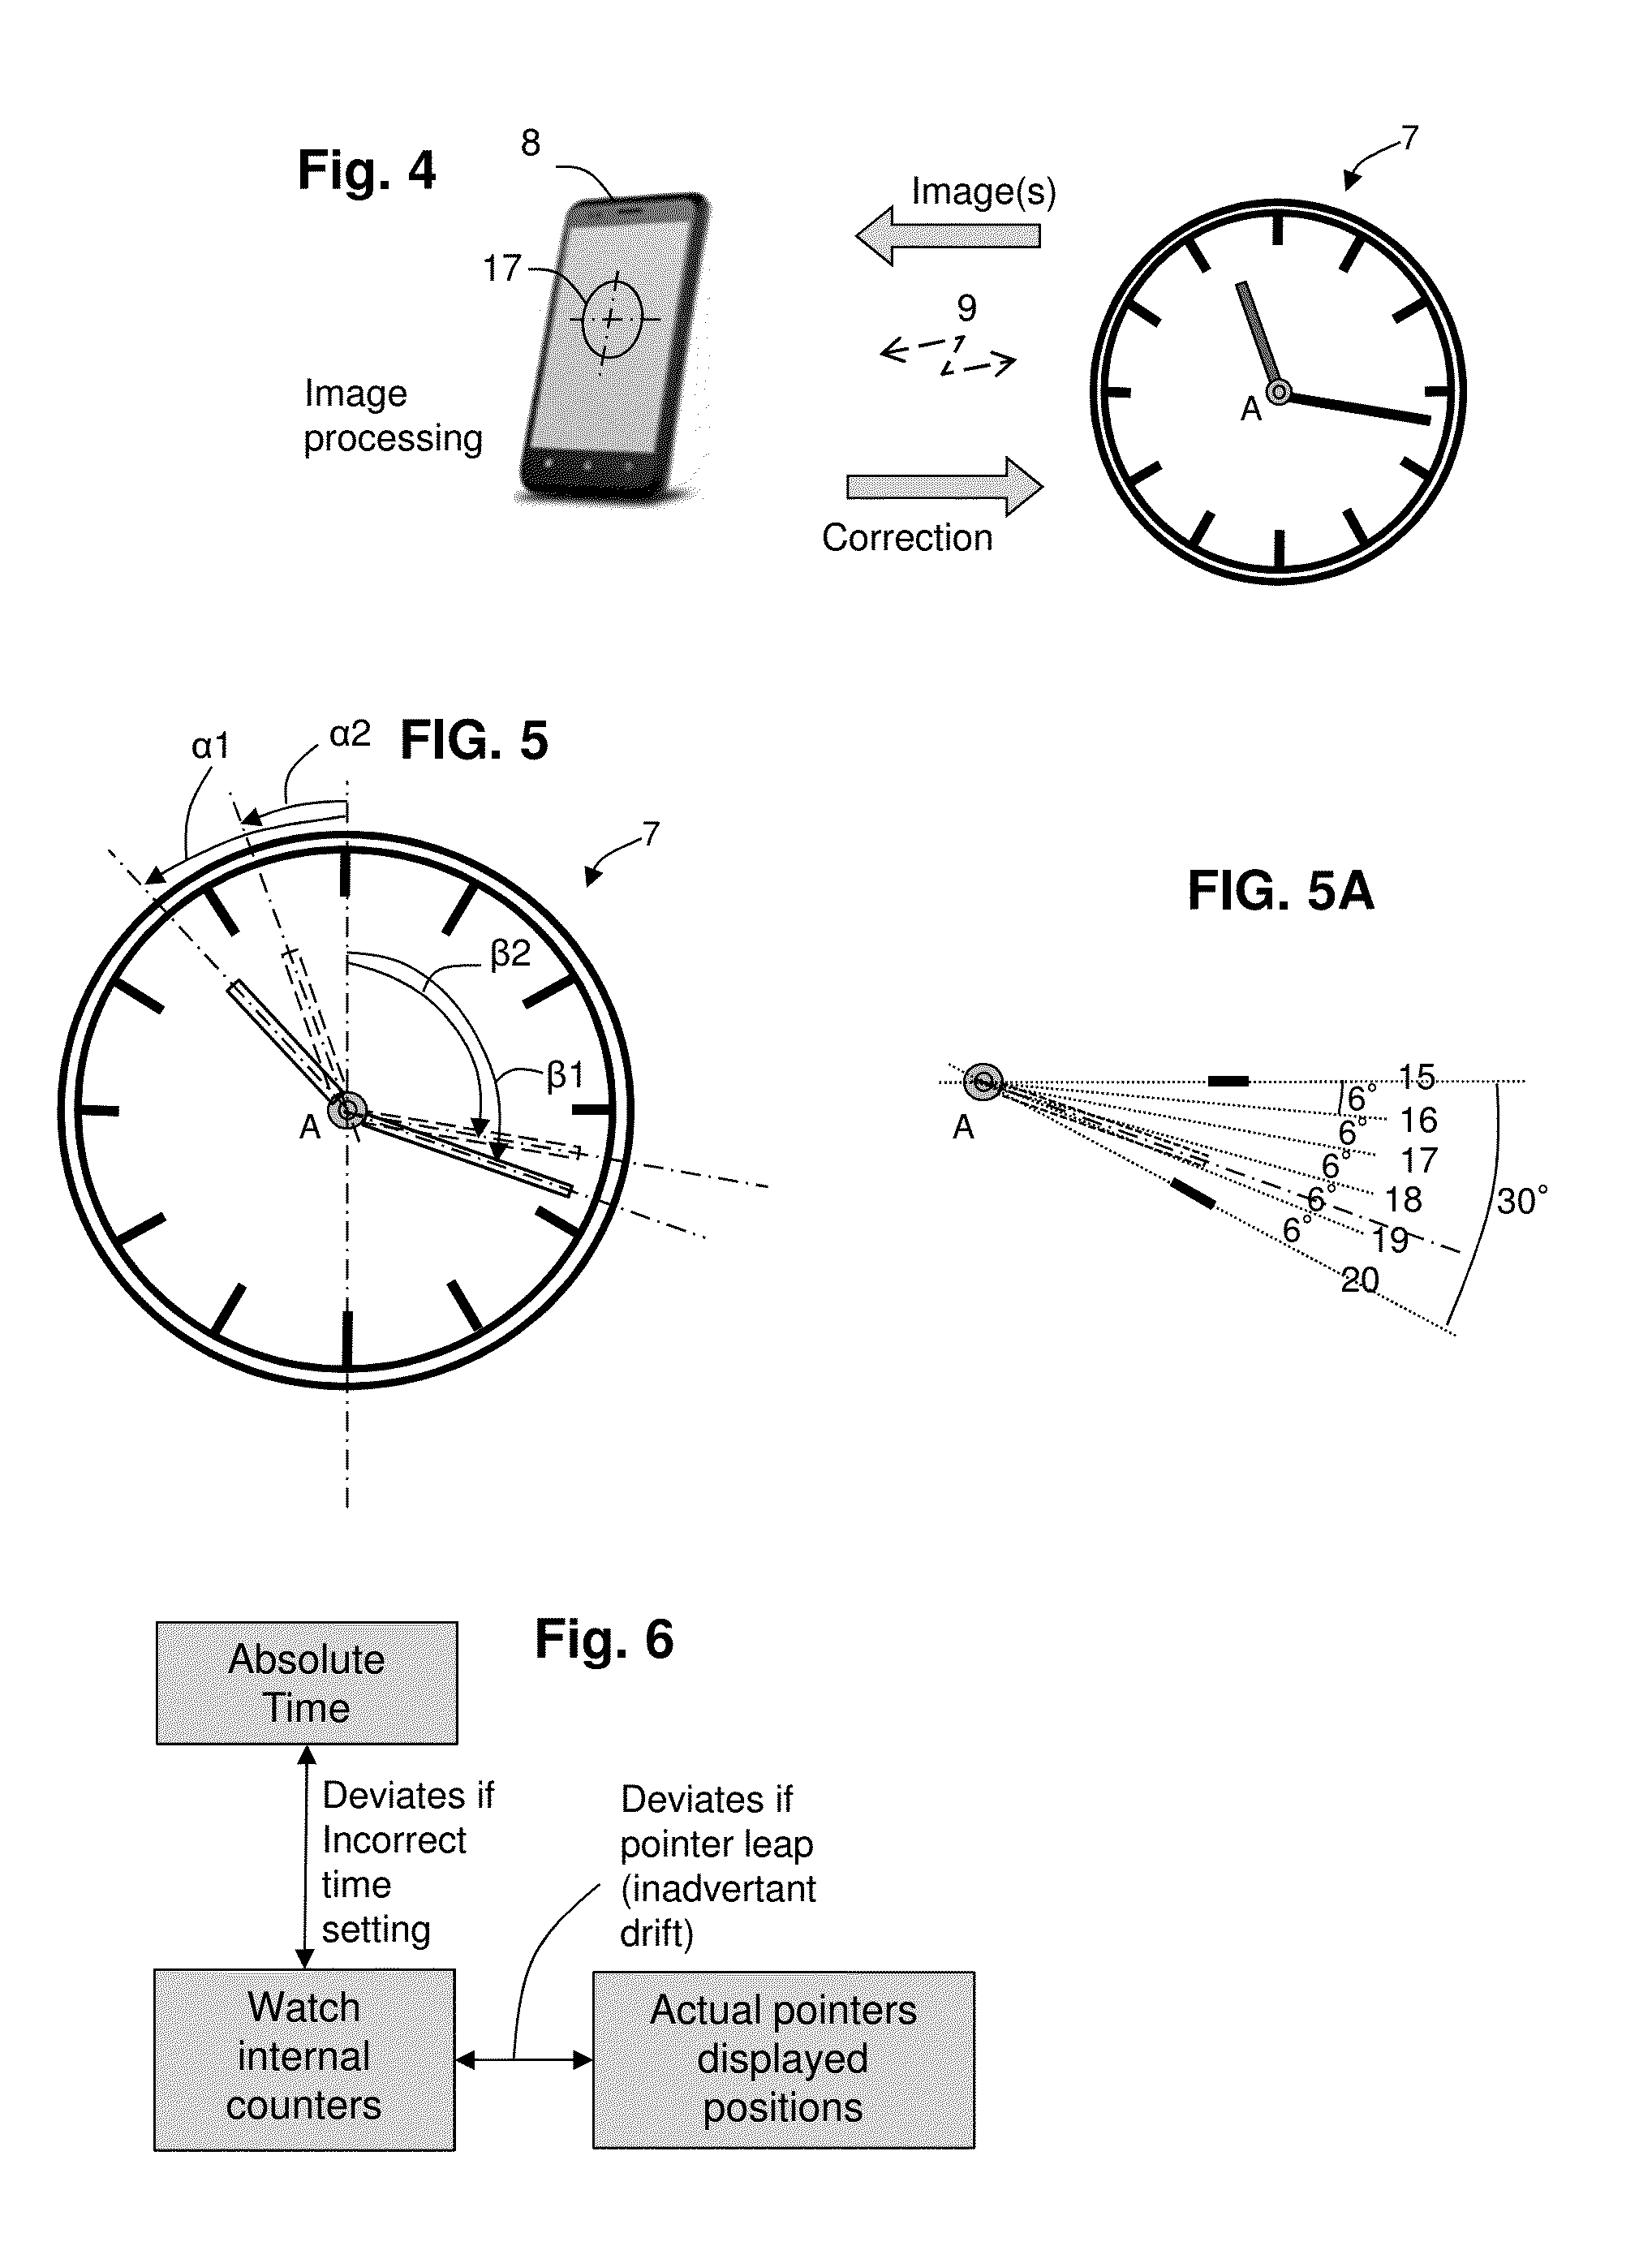 Analog Type Watch and Time Set Method